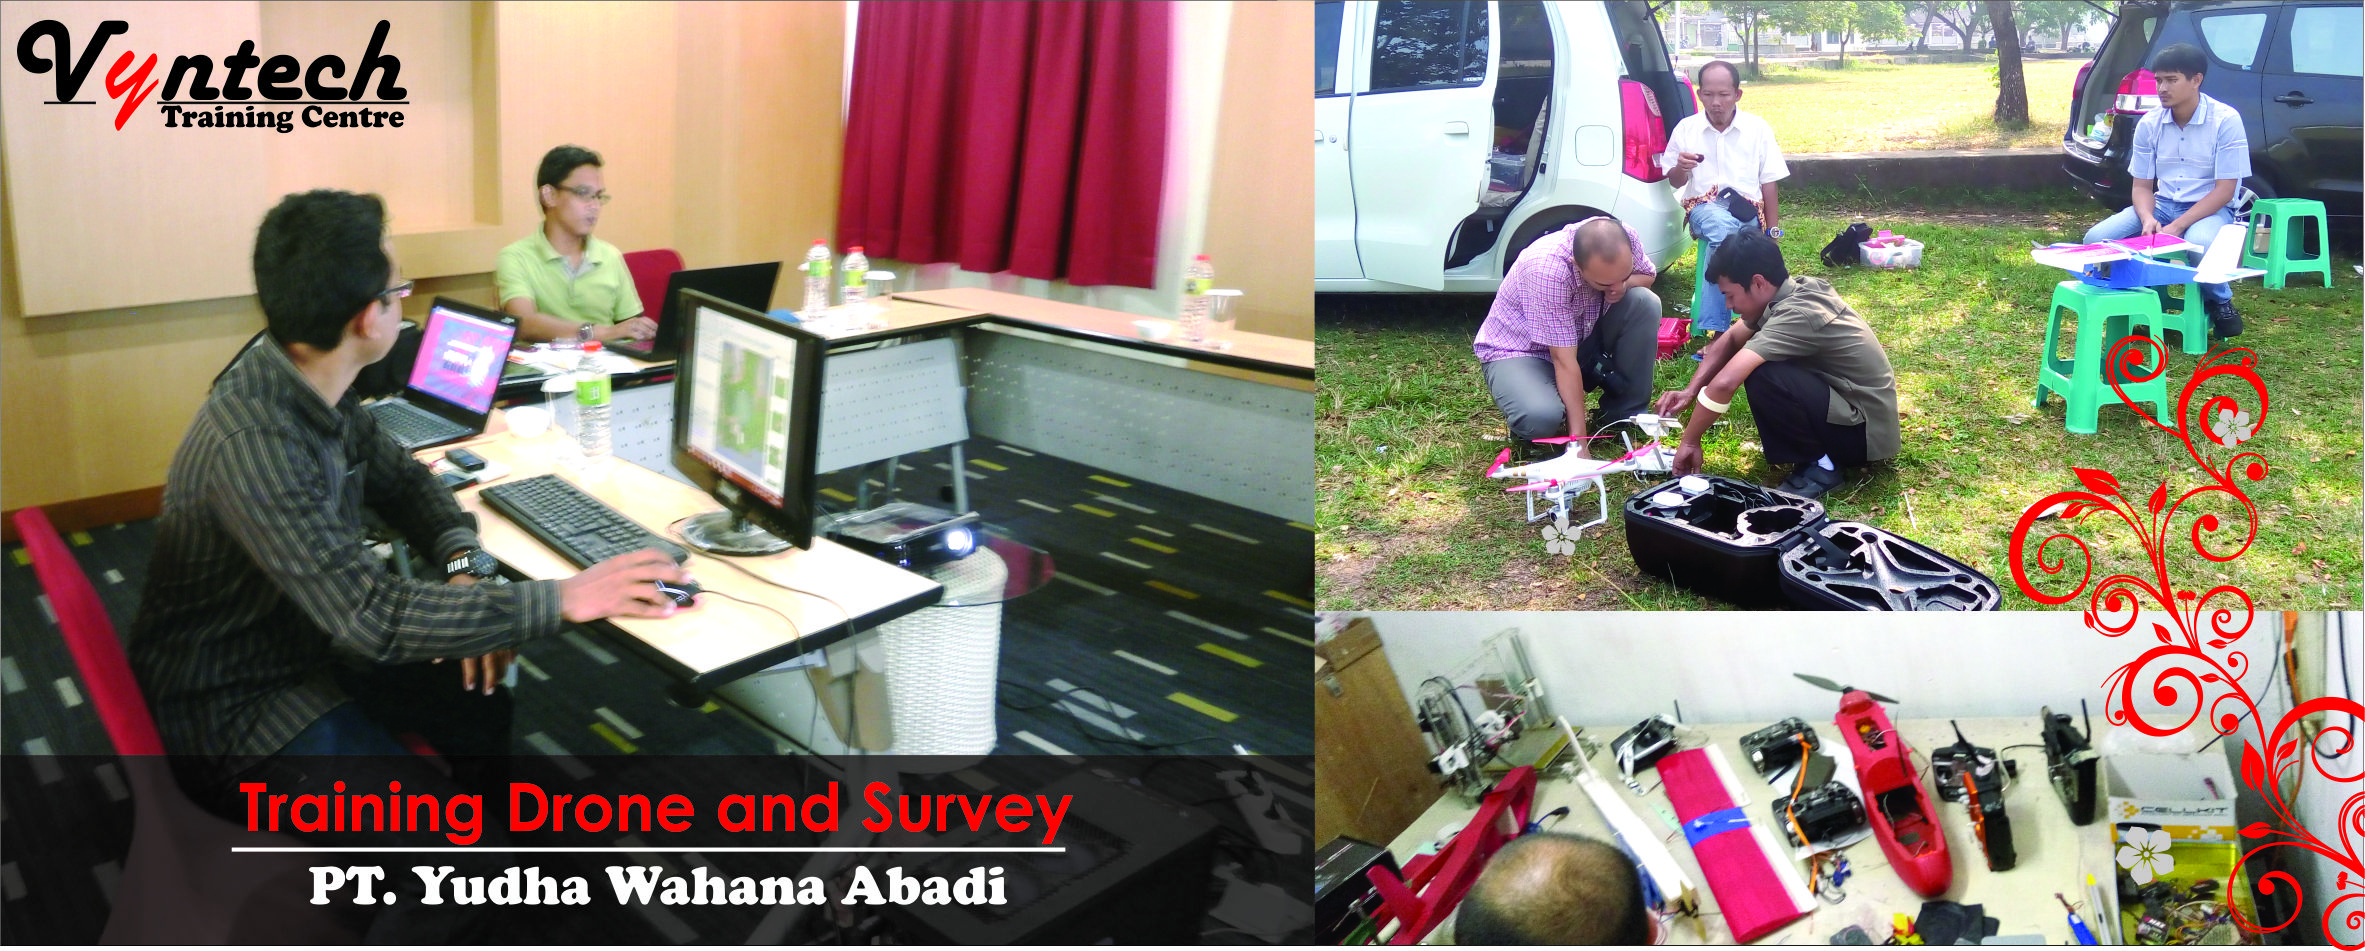 20150613 Training Drone and Survey - PT. Yudha Wahana Abadi (Yudha Group)